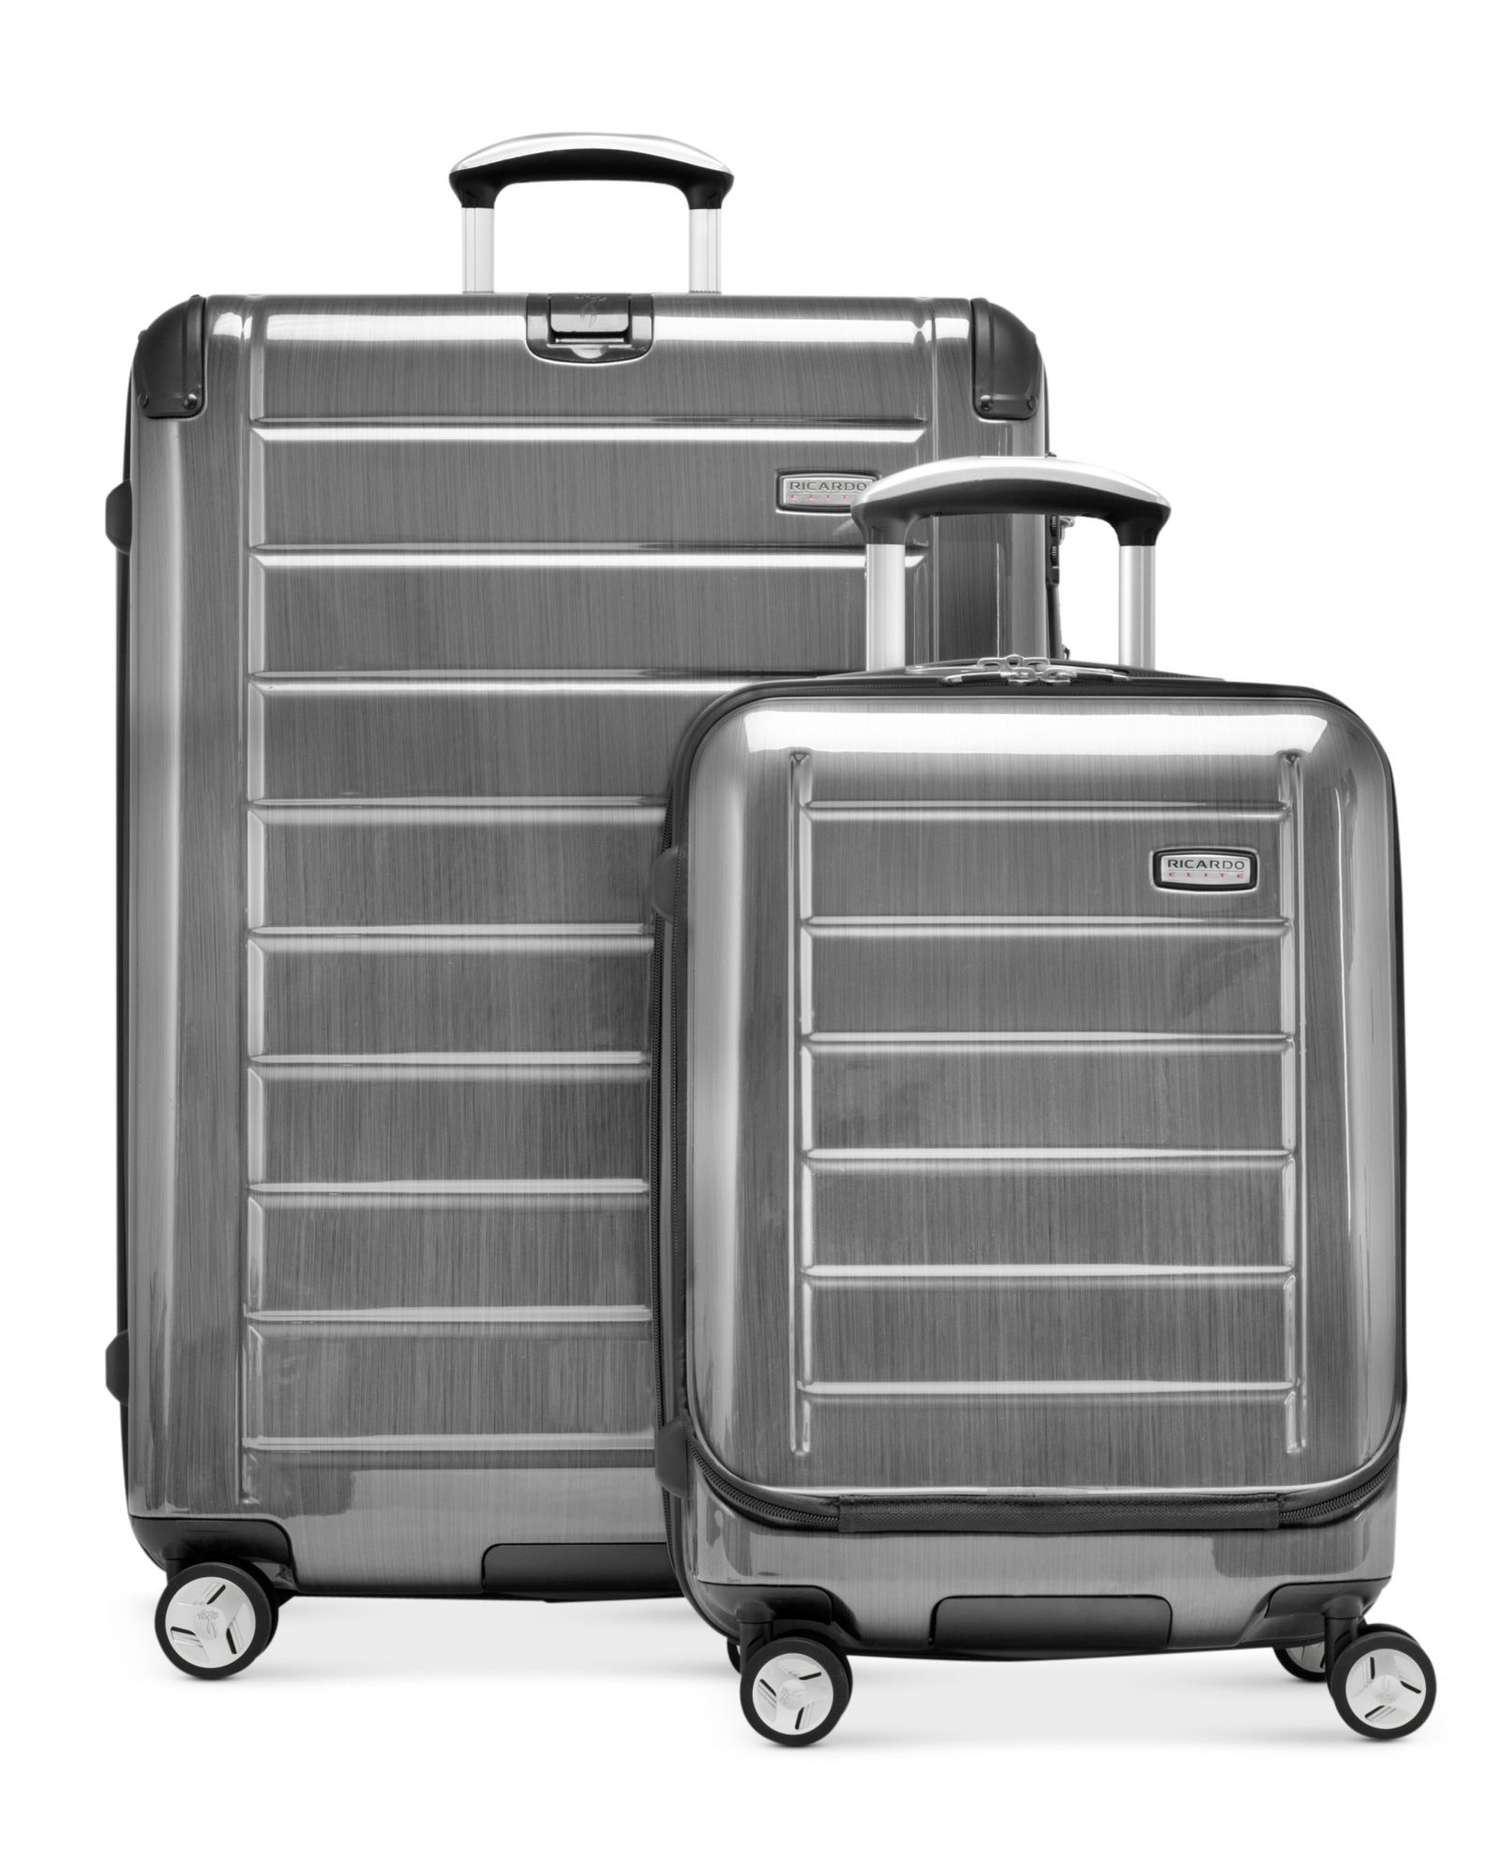 macys-registry-4-ricardo-roxbury-luggage-0115.jpg